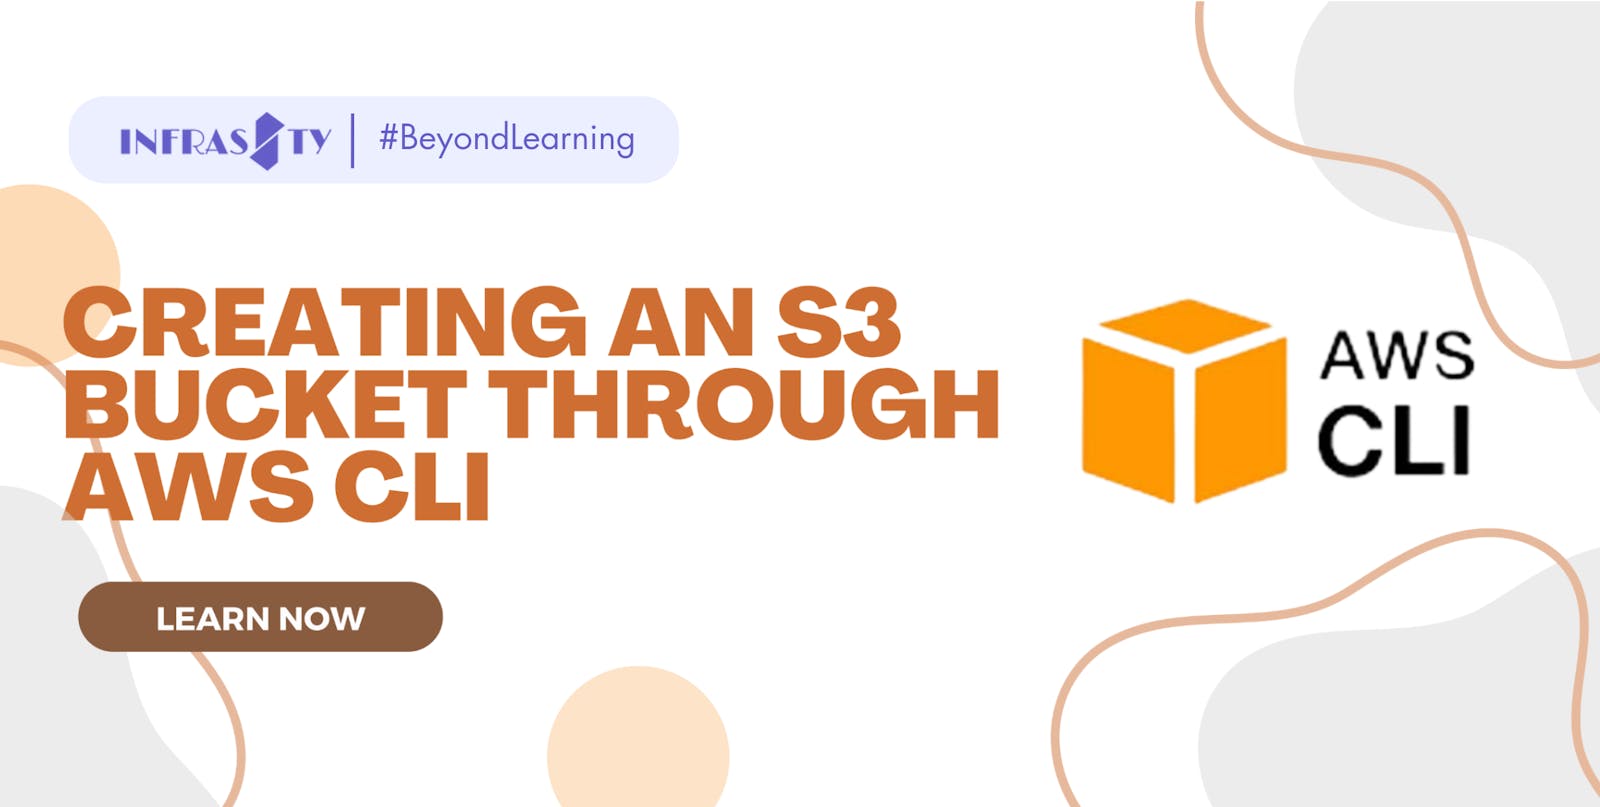 Title: Creating an S3 Bucket through AWS CLI